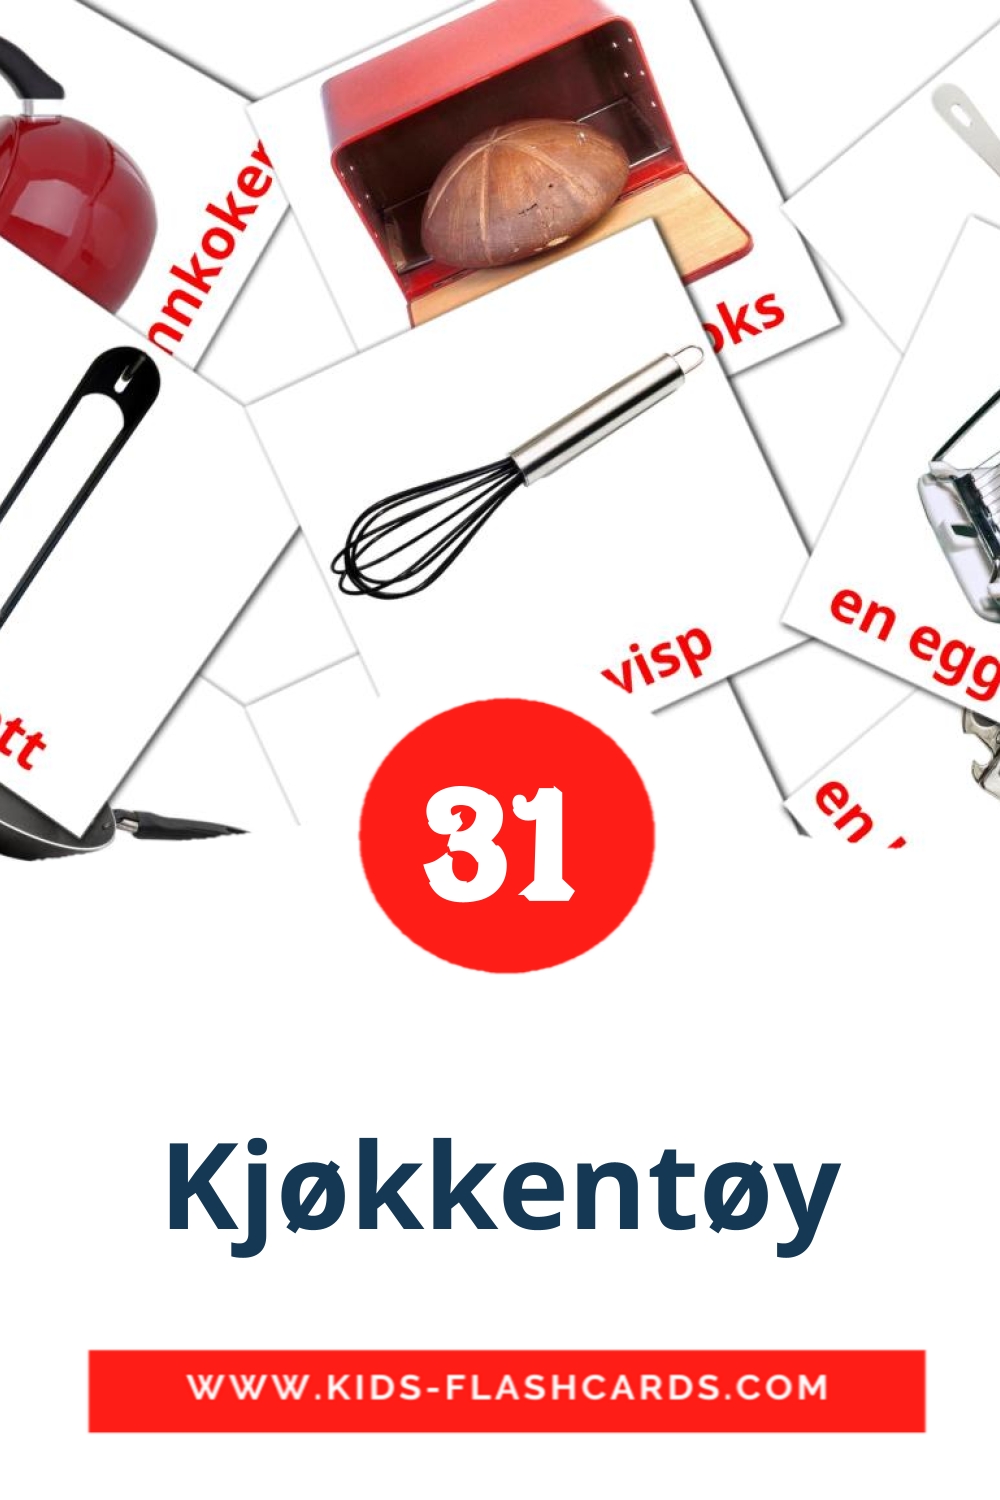 Kjøkkentøy на норвежском для Детского Сада (35 карточек)